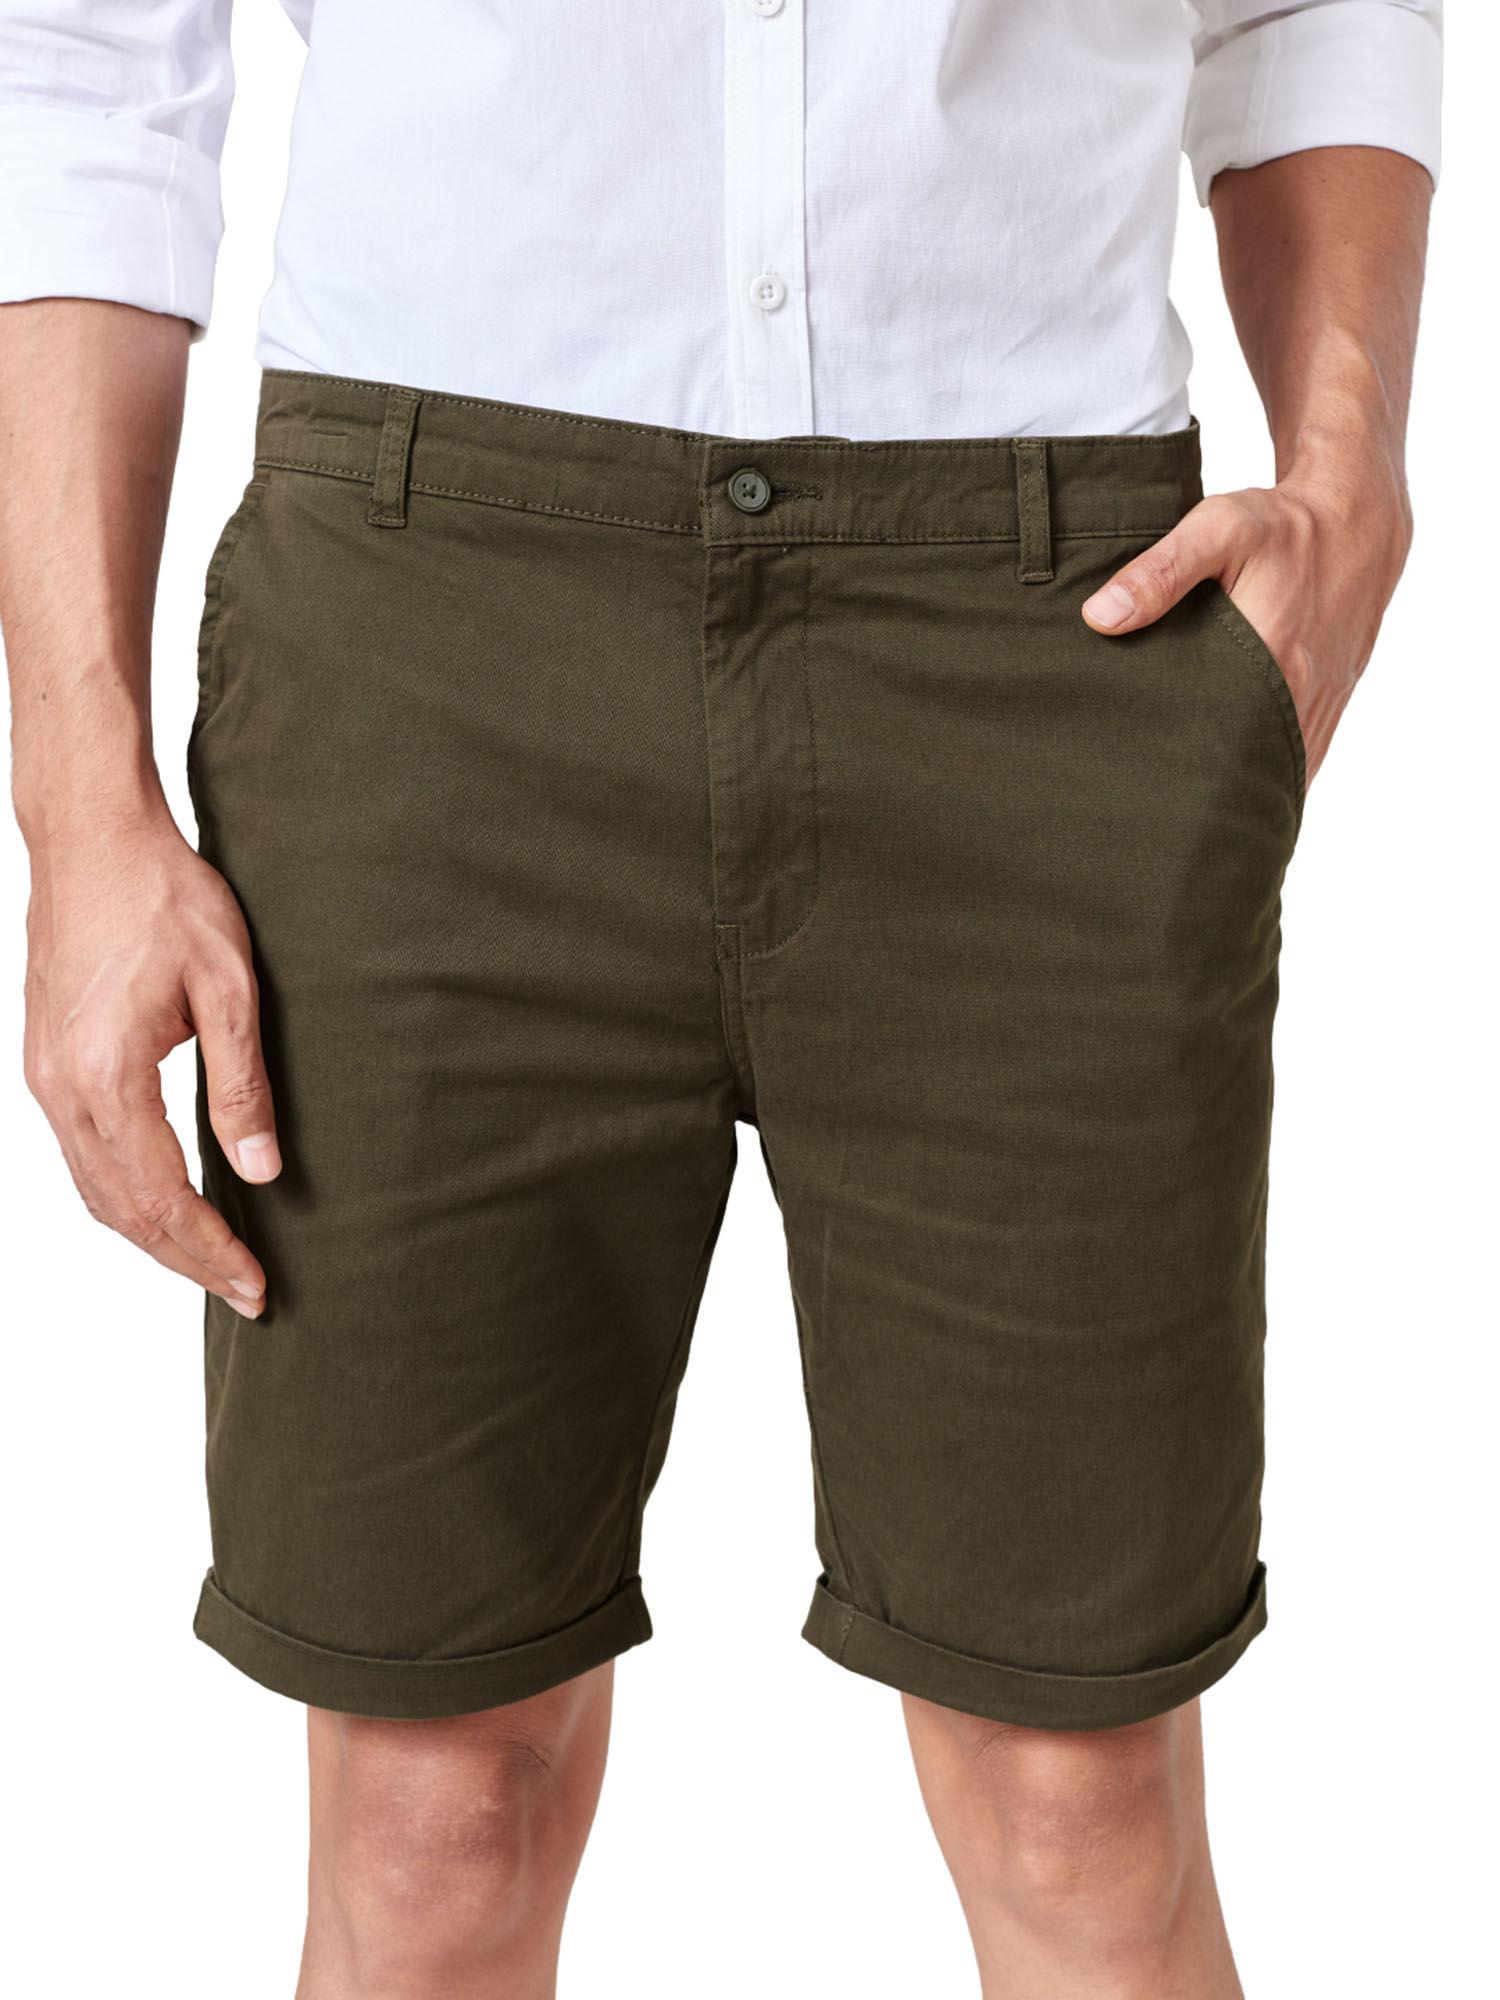 solids dark olive twill shorts for men